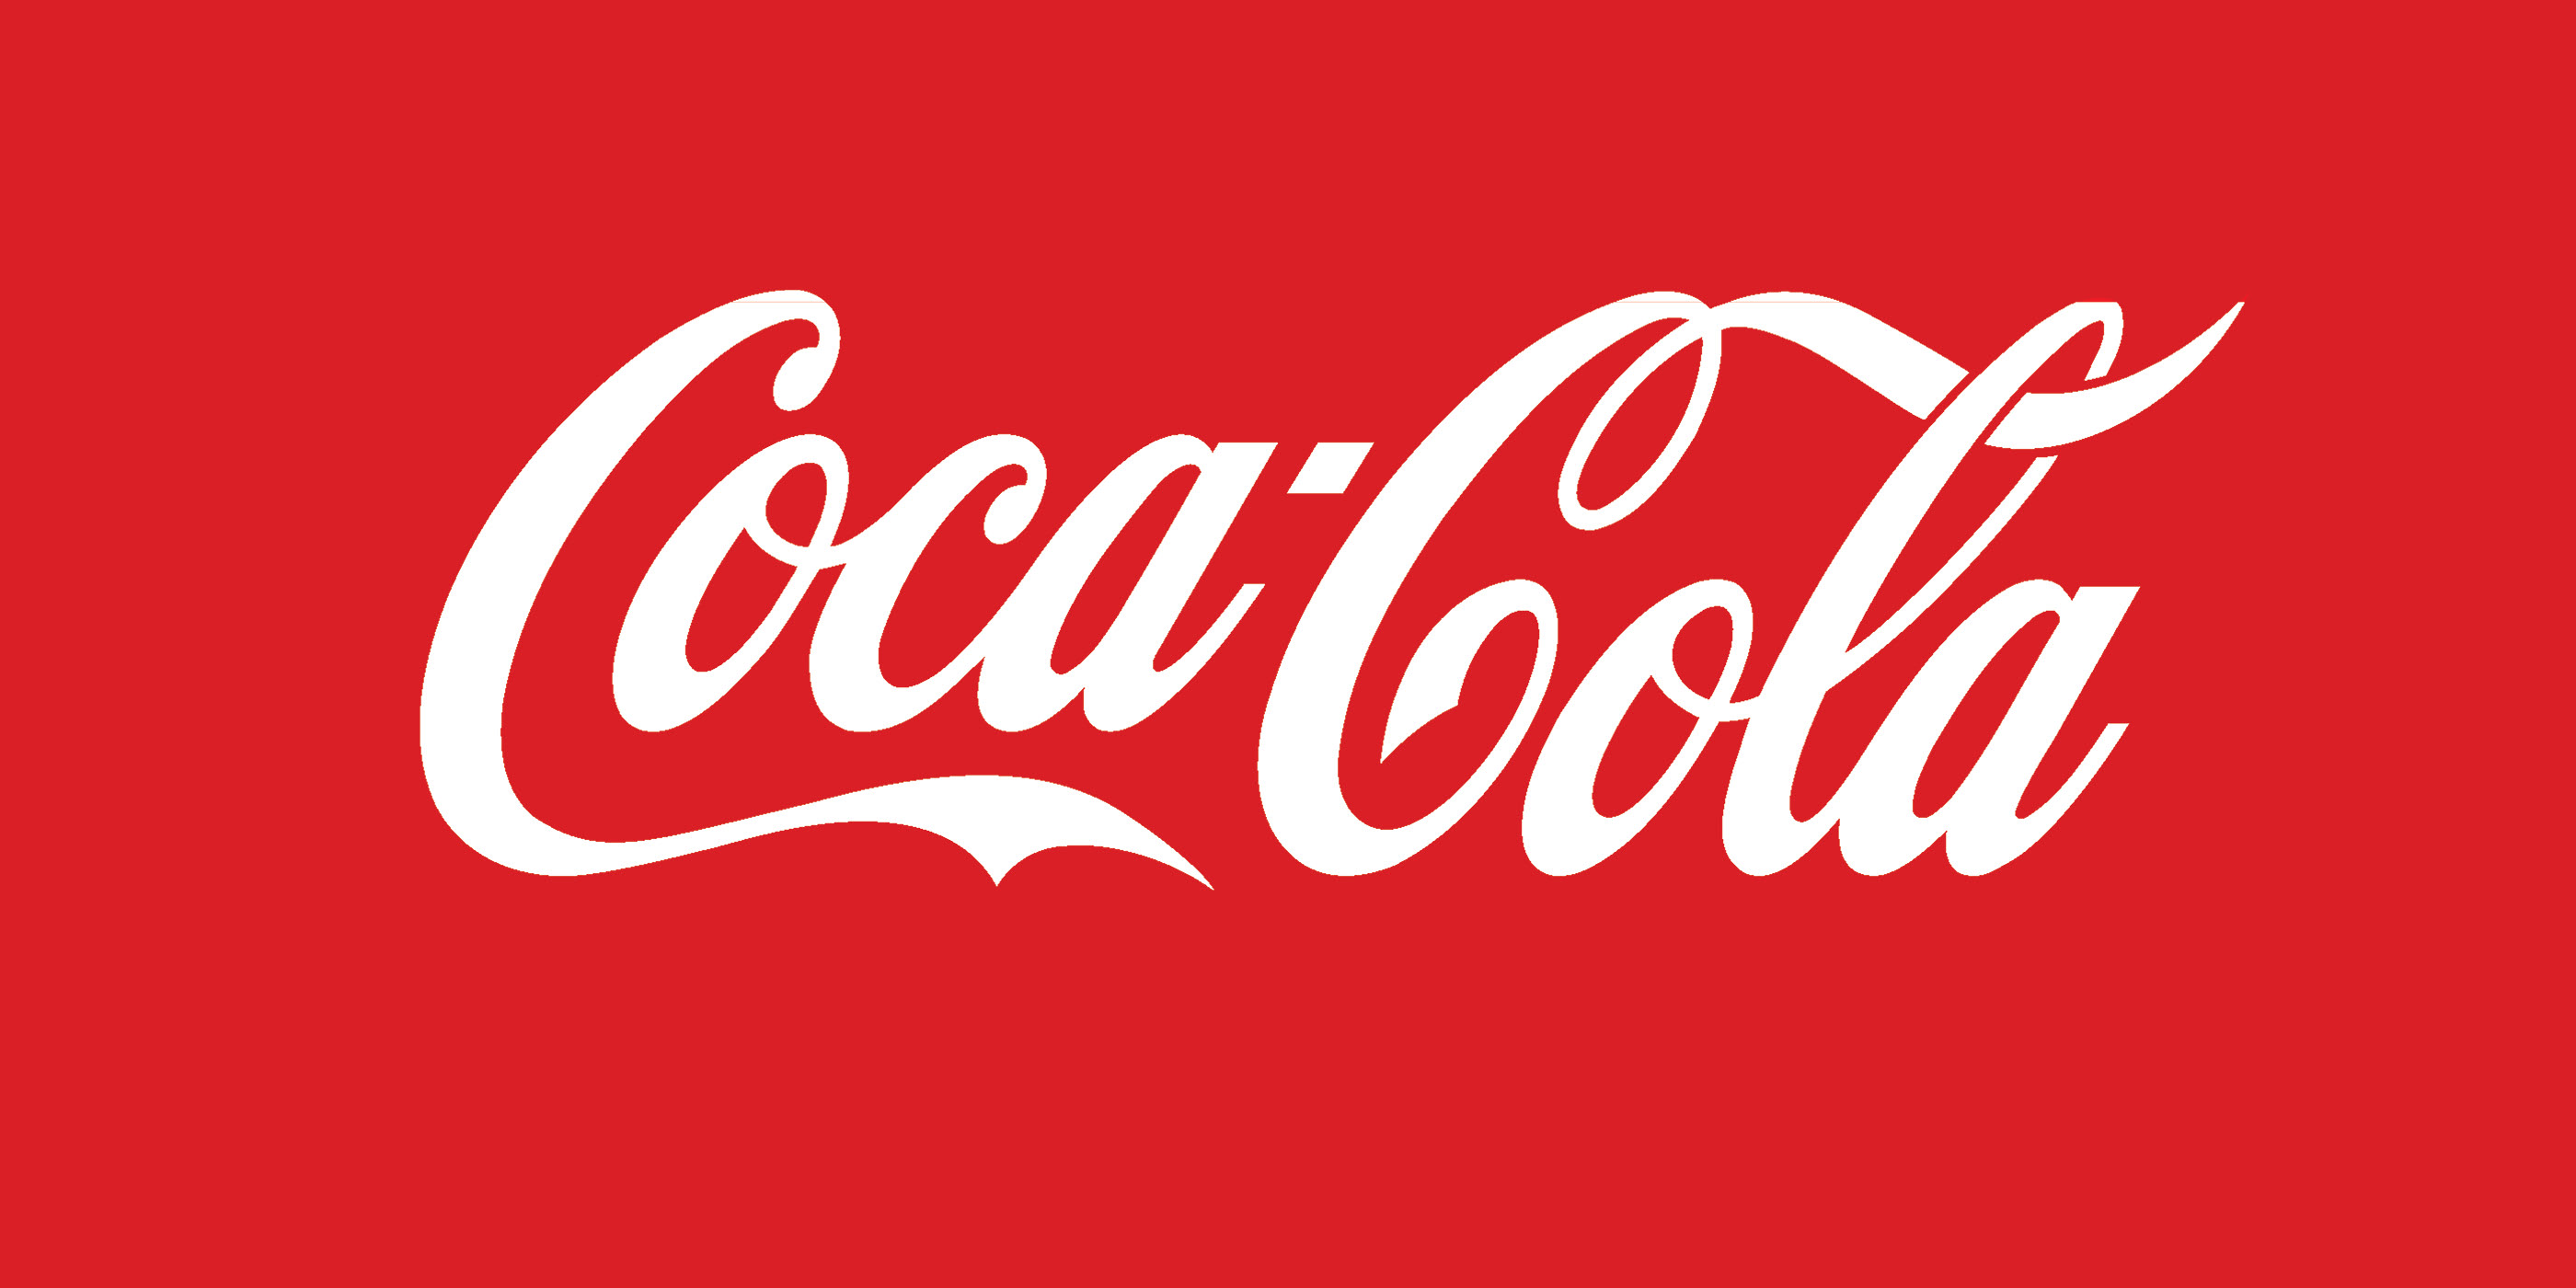 Надпись кока кола. Кока кола лого. Товарный знак Кока колы. Логотип компании Кока кола.